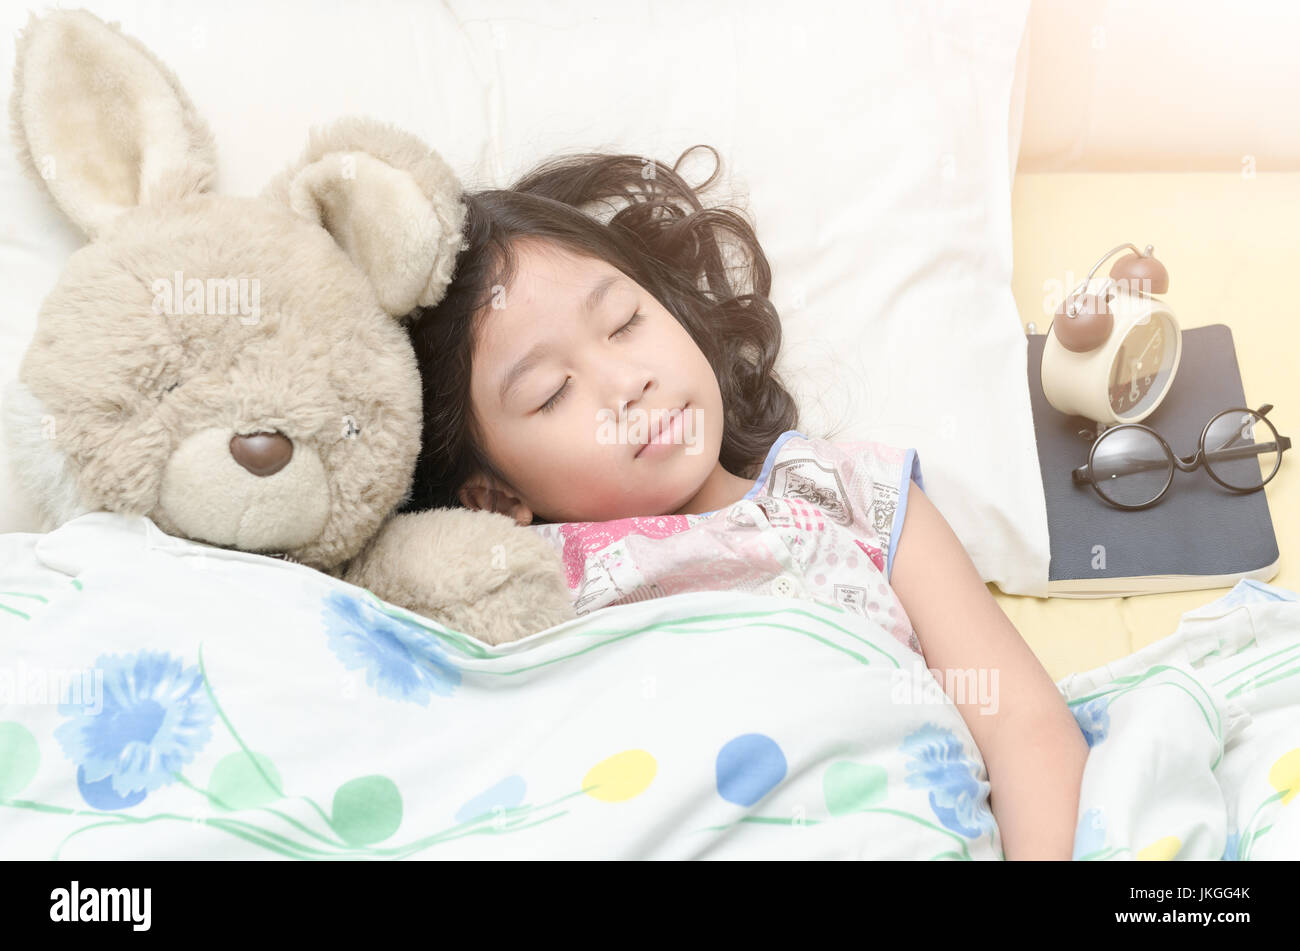 Cute girl dormir Sweet Dream avec ours en peluche sur son lit Photo Stock -  Alamy